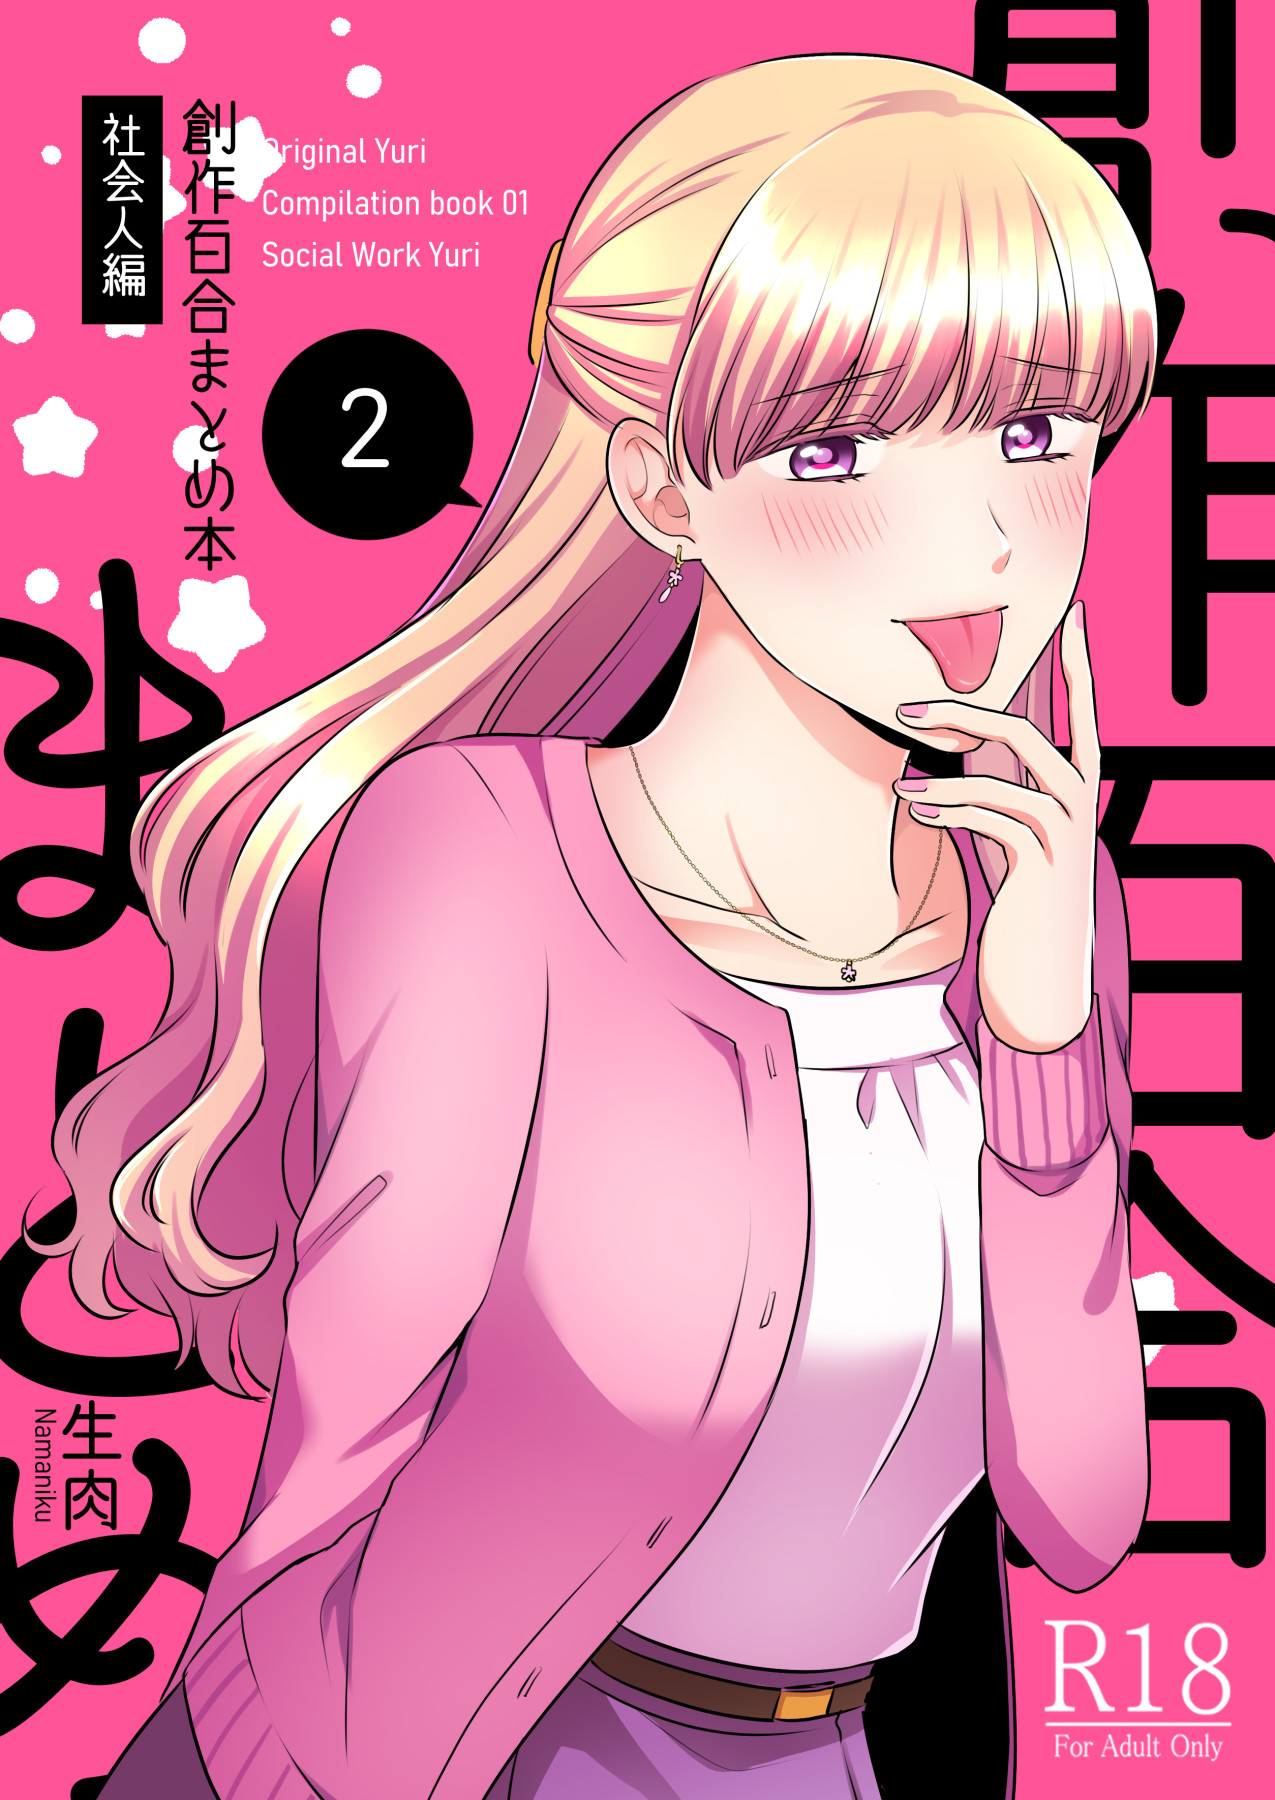 Hentai Manga Comic-Yuri Compilation Book 2-Read-1